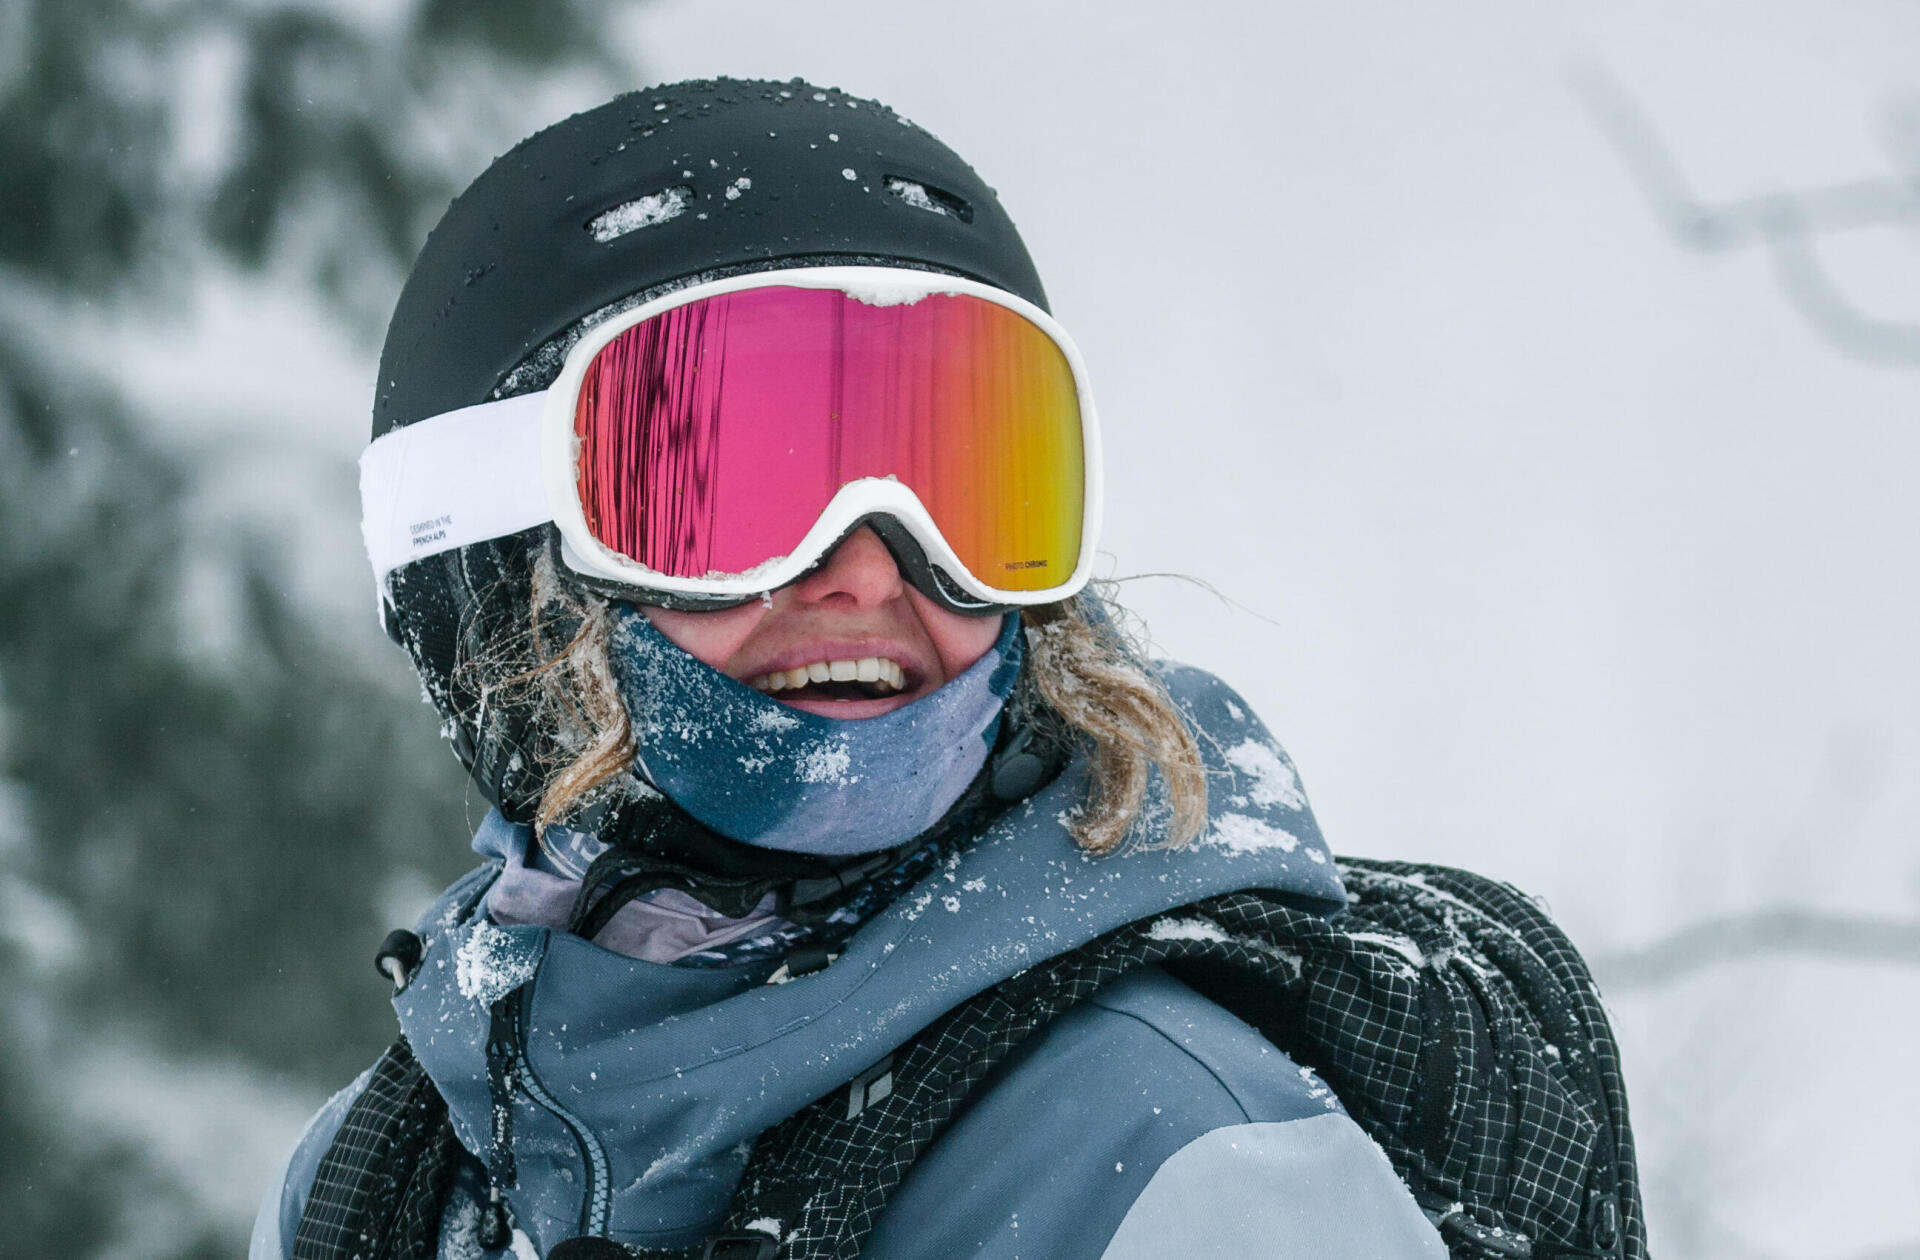 Comment choisir sa protection ski ou snowboard?